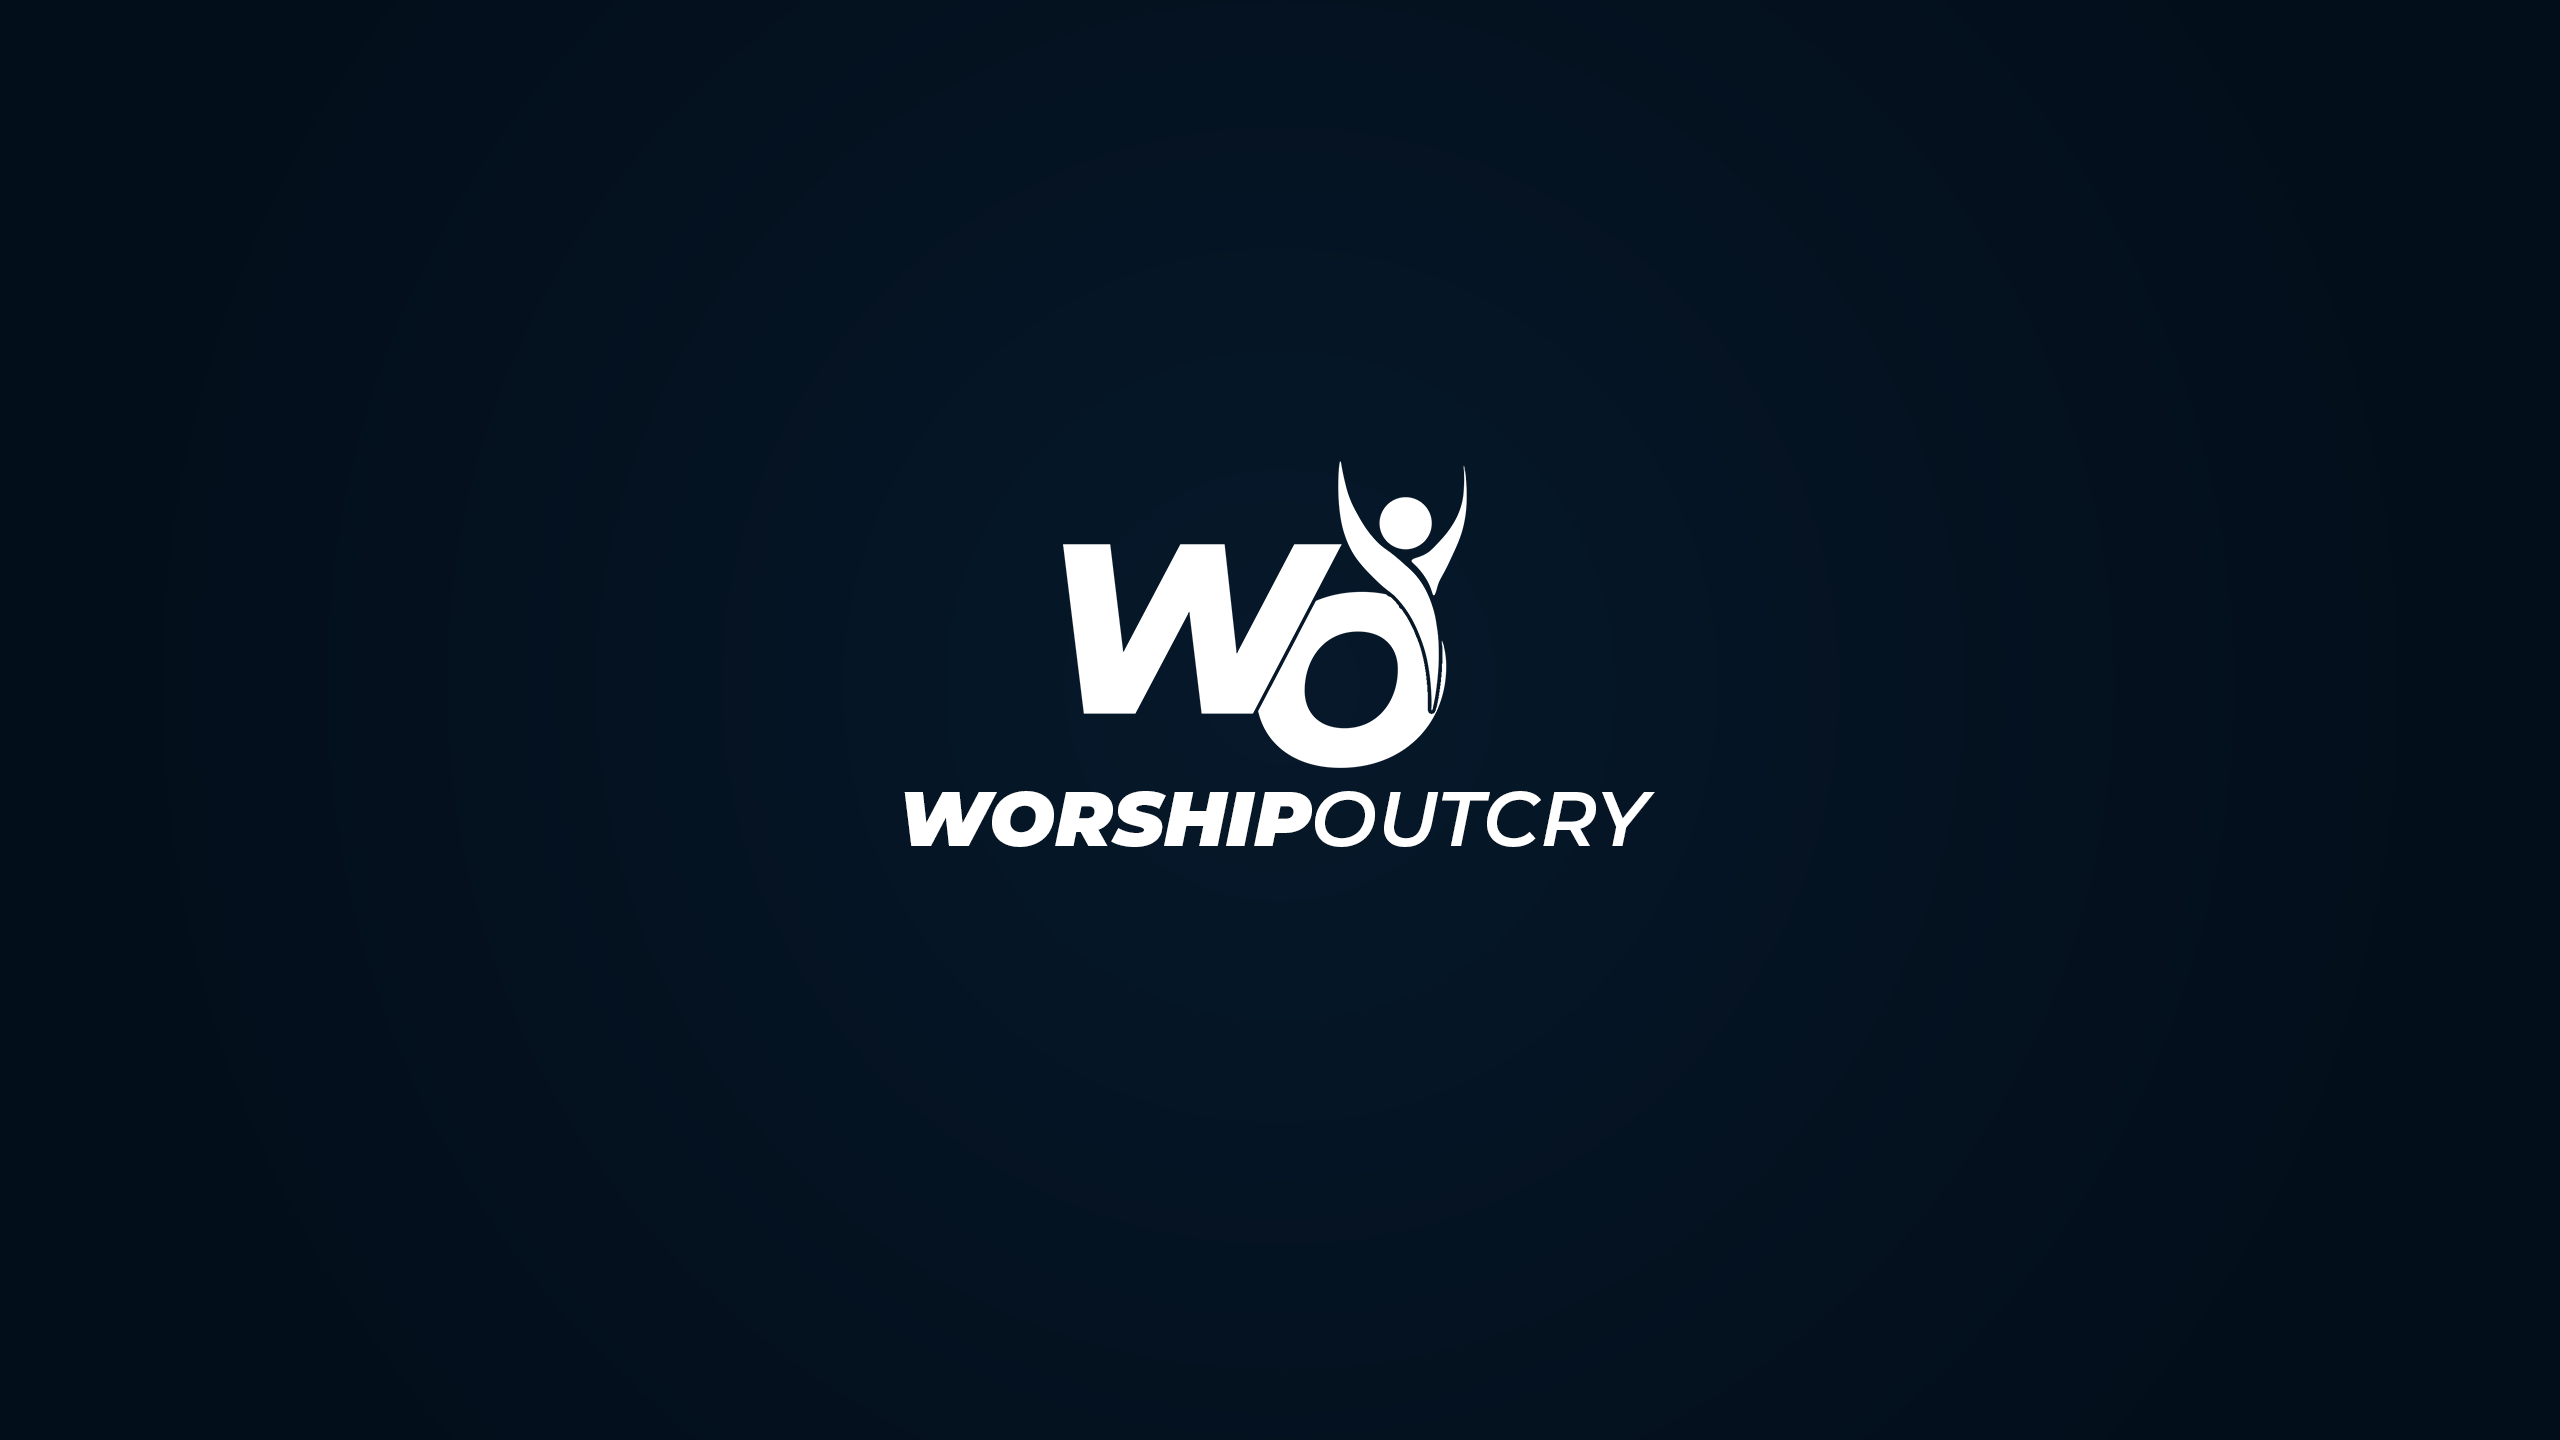 Worship Outcry